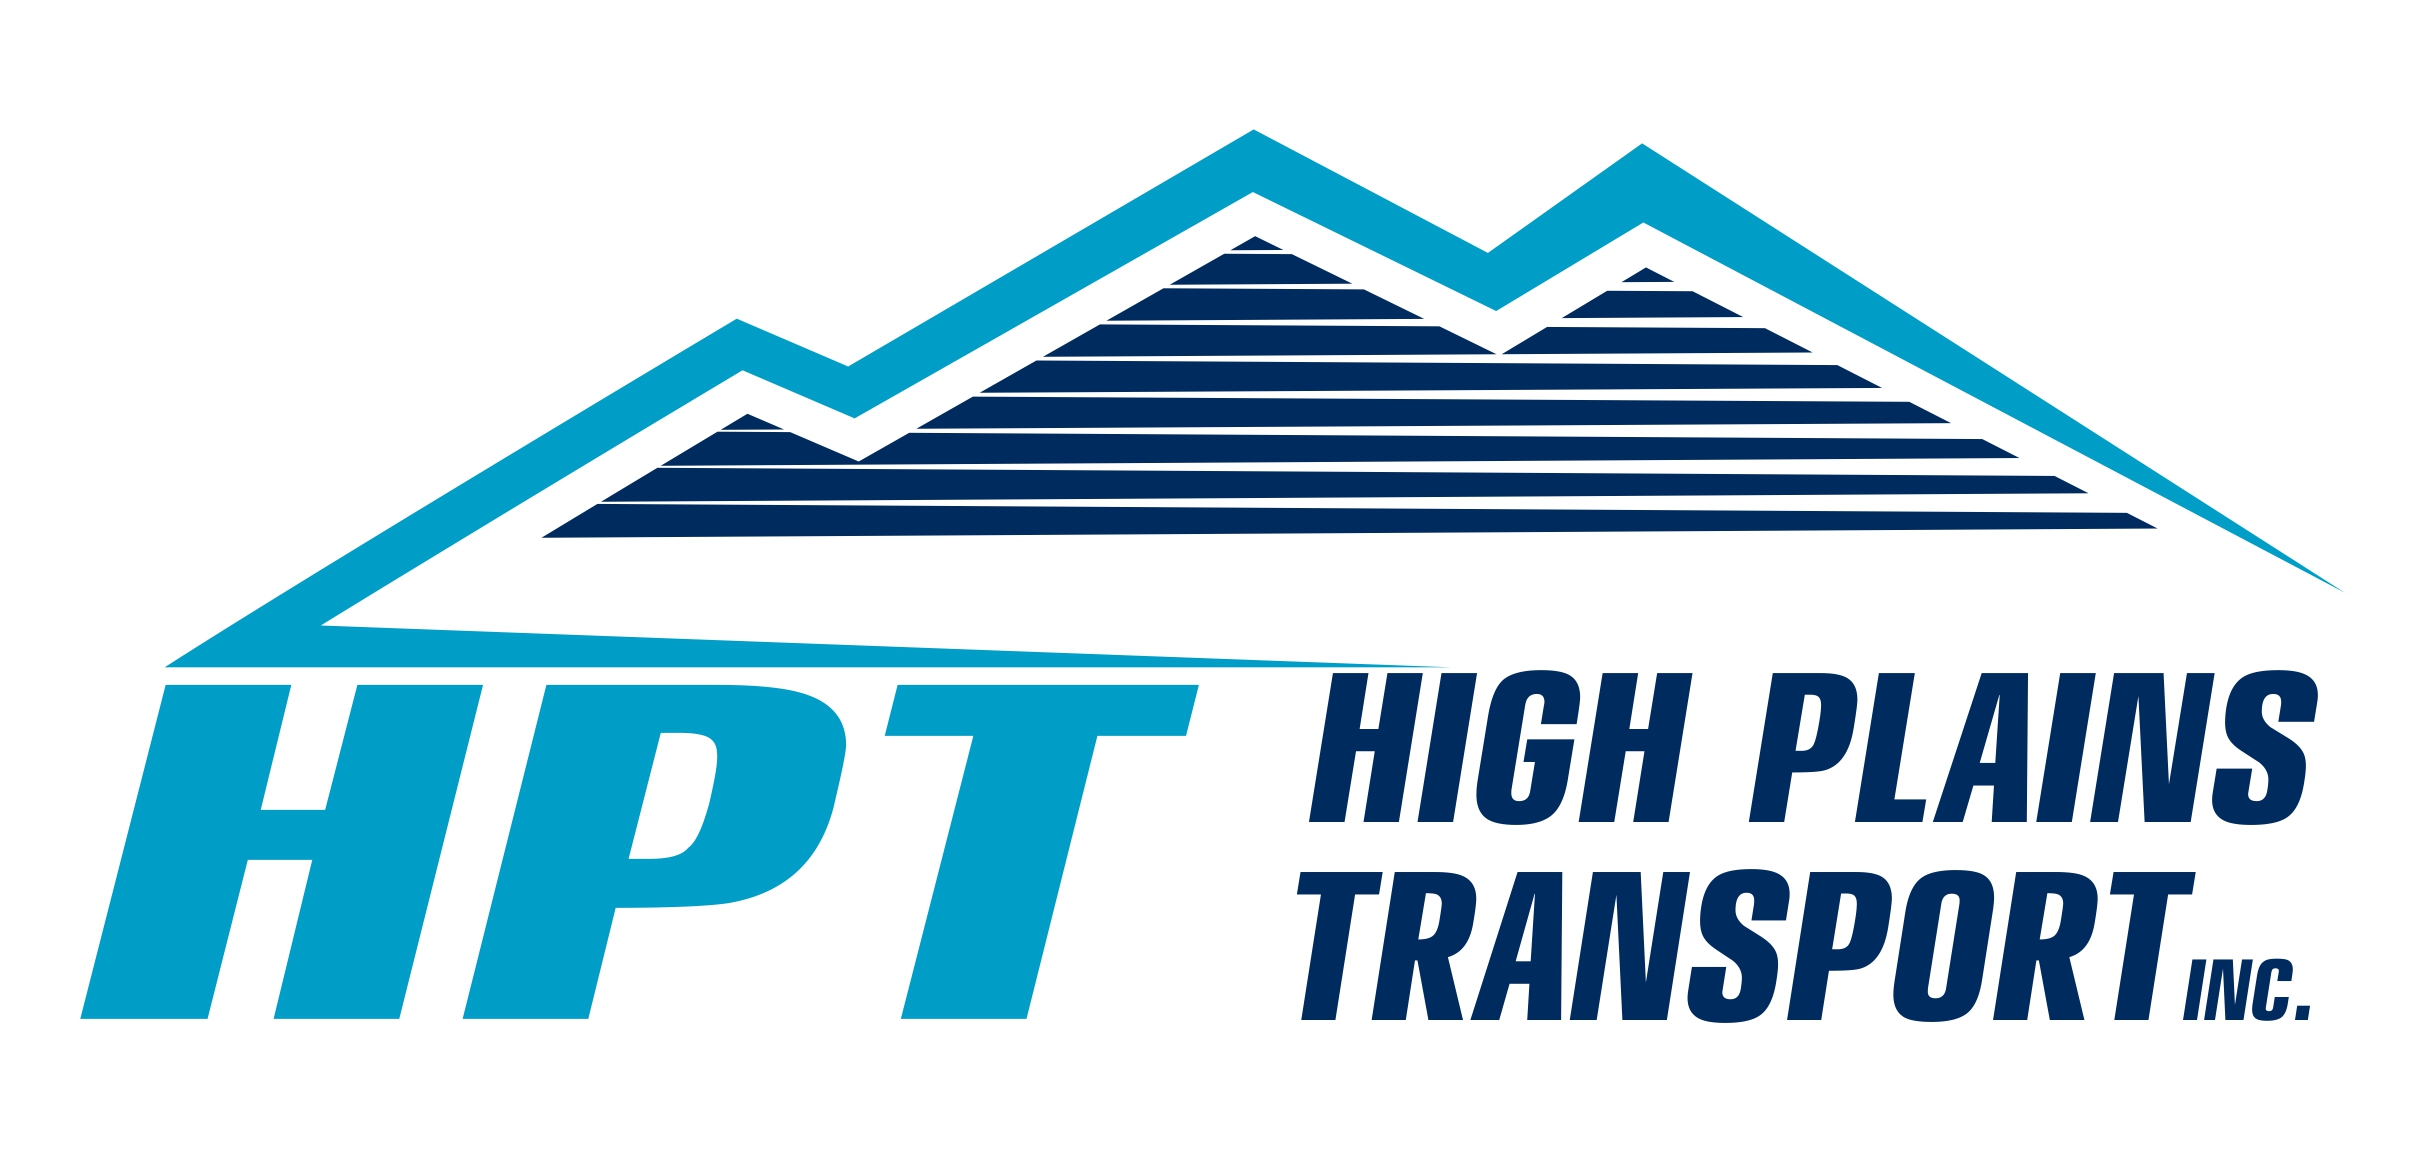 High Plains Transport Inc